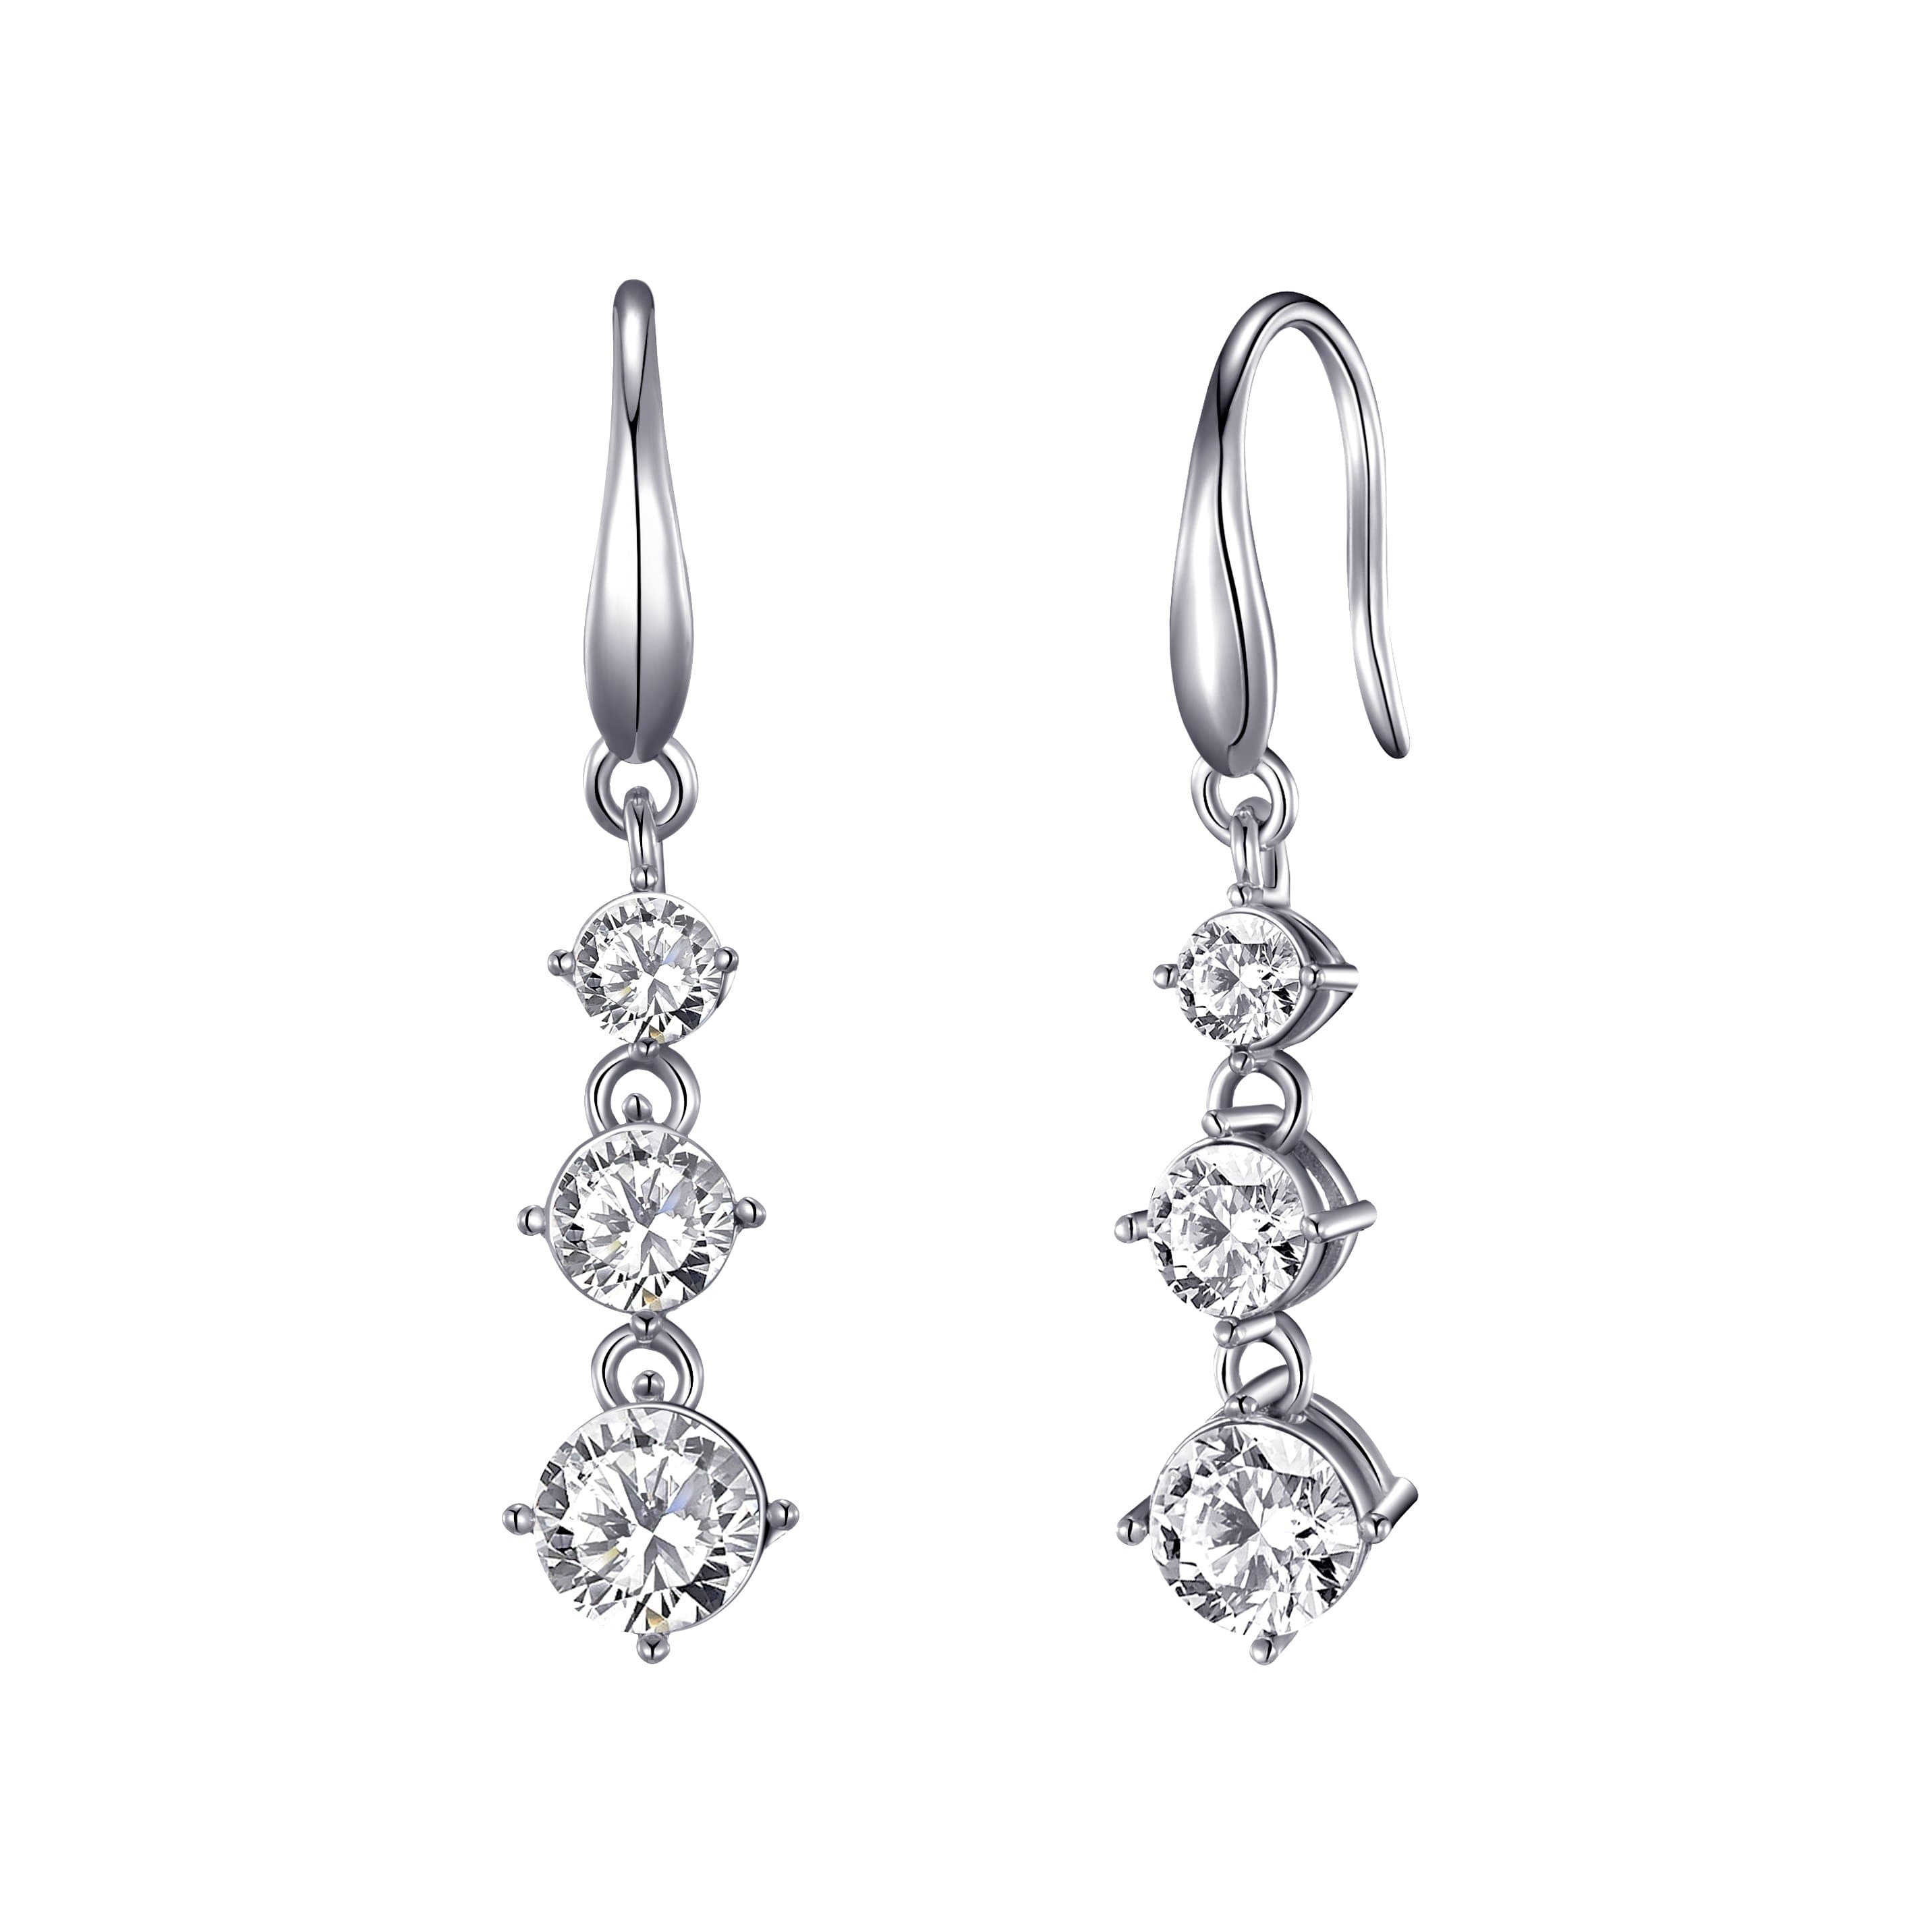 Graduated Drop Earrings Created with Zircondia® Crystals by Philip Jones Jewellery